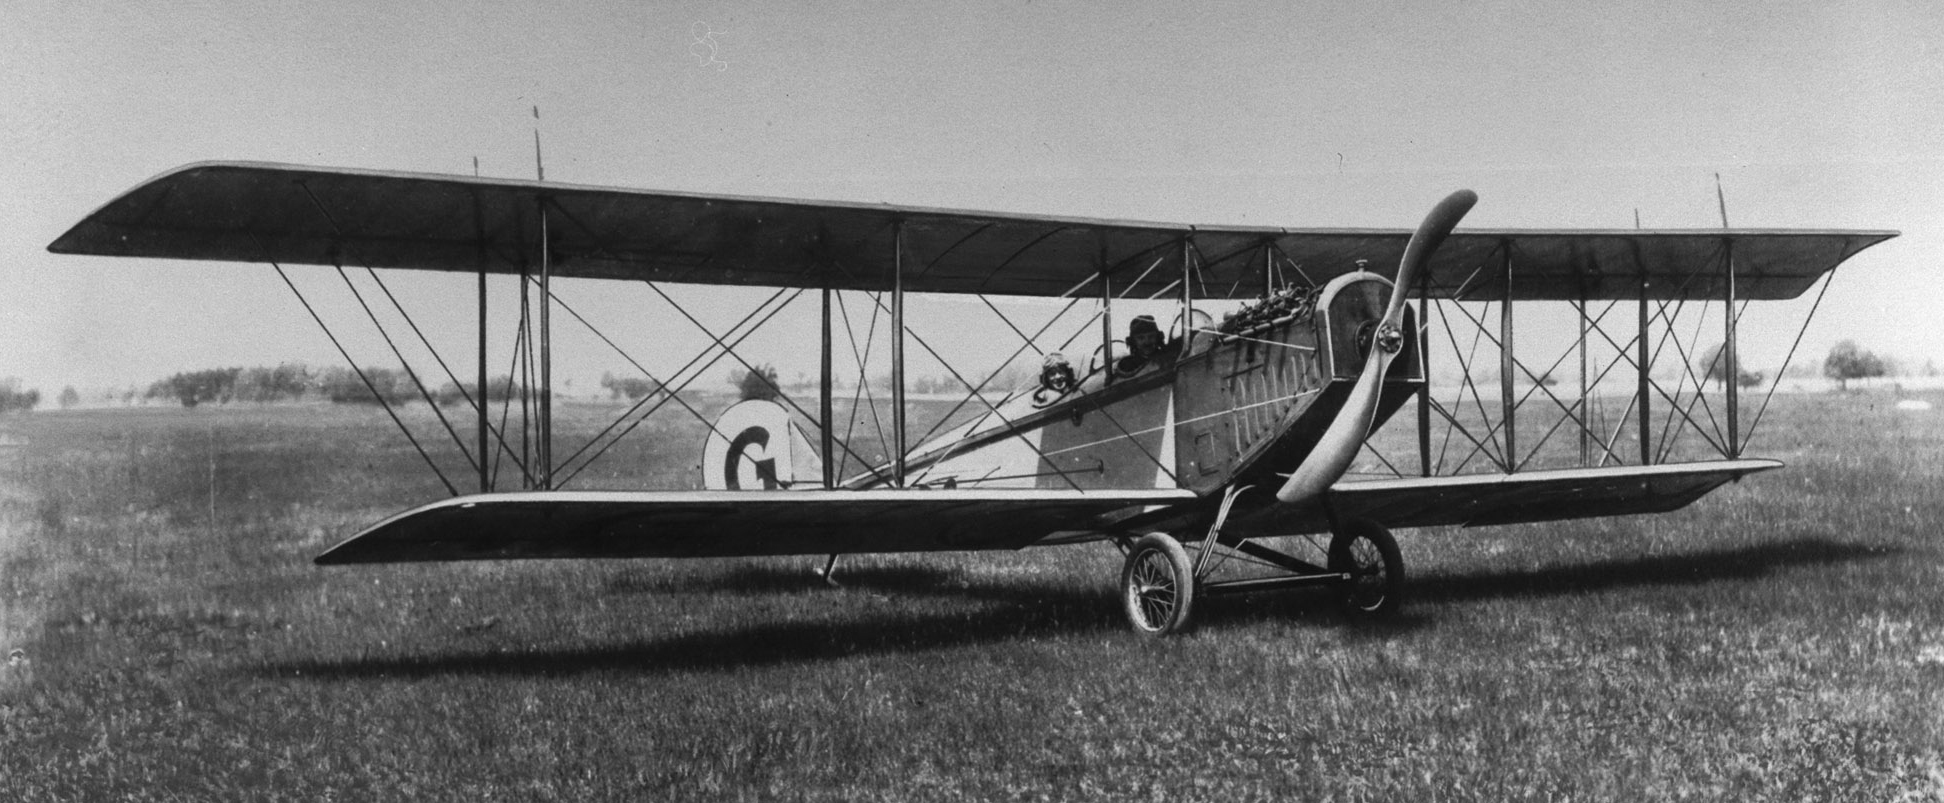 Un Curtiss JN 4 Canuck. PHOTO : Archives du MDN, PL-113903